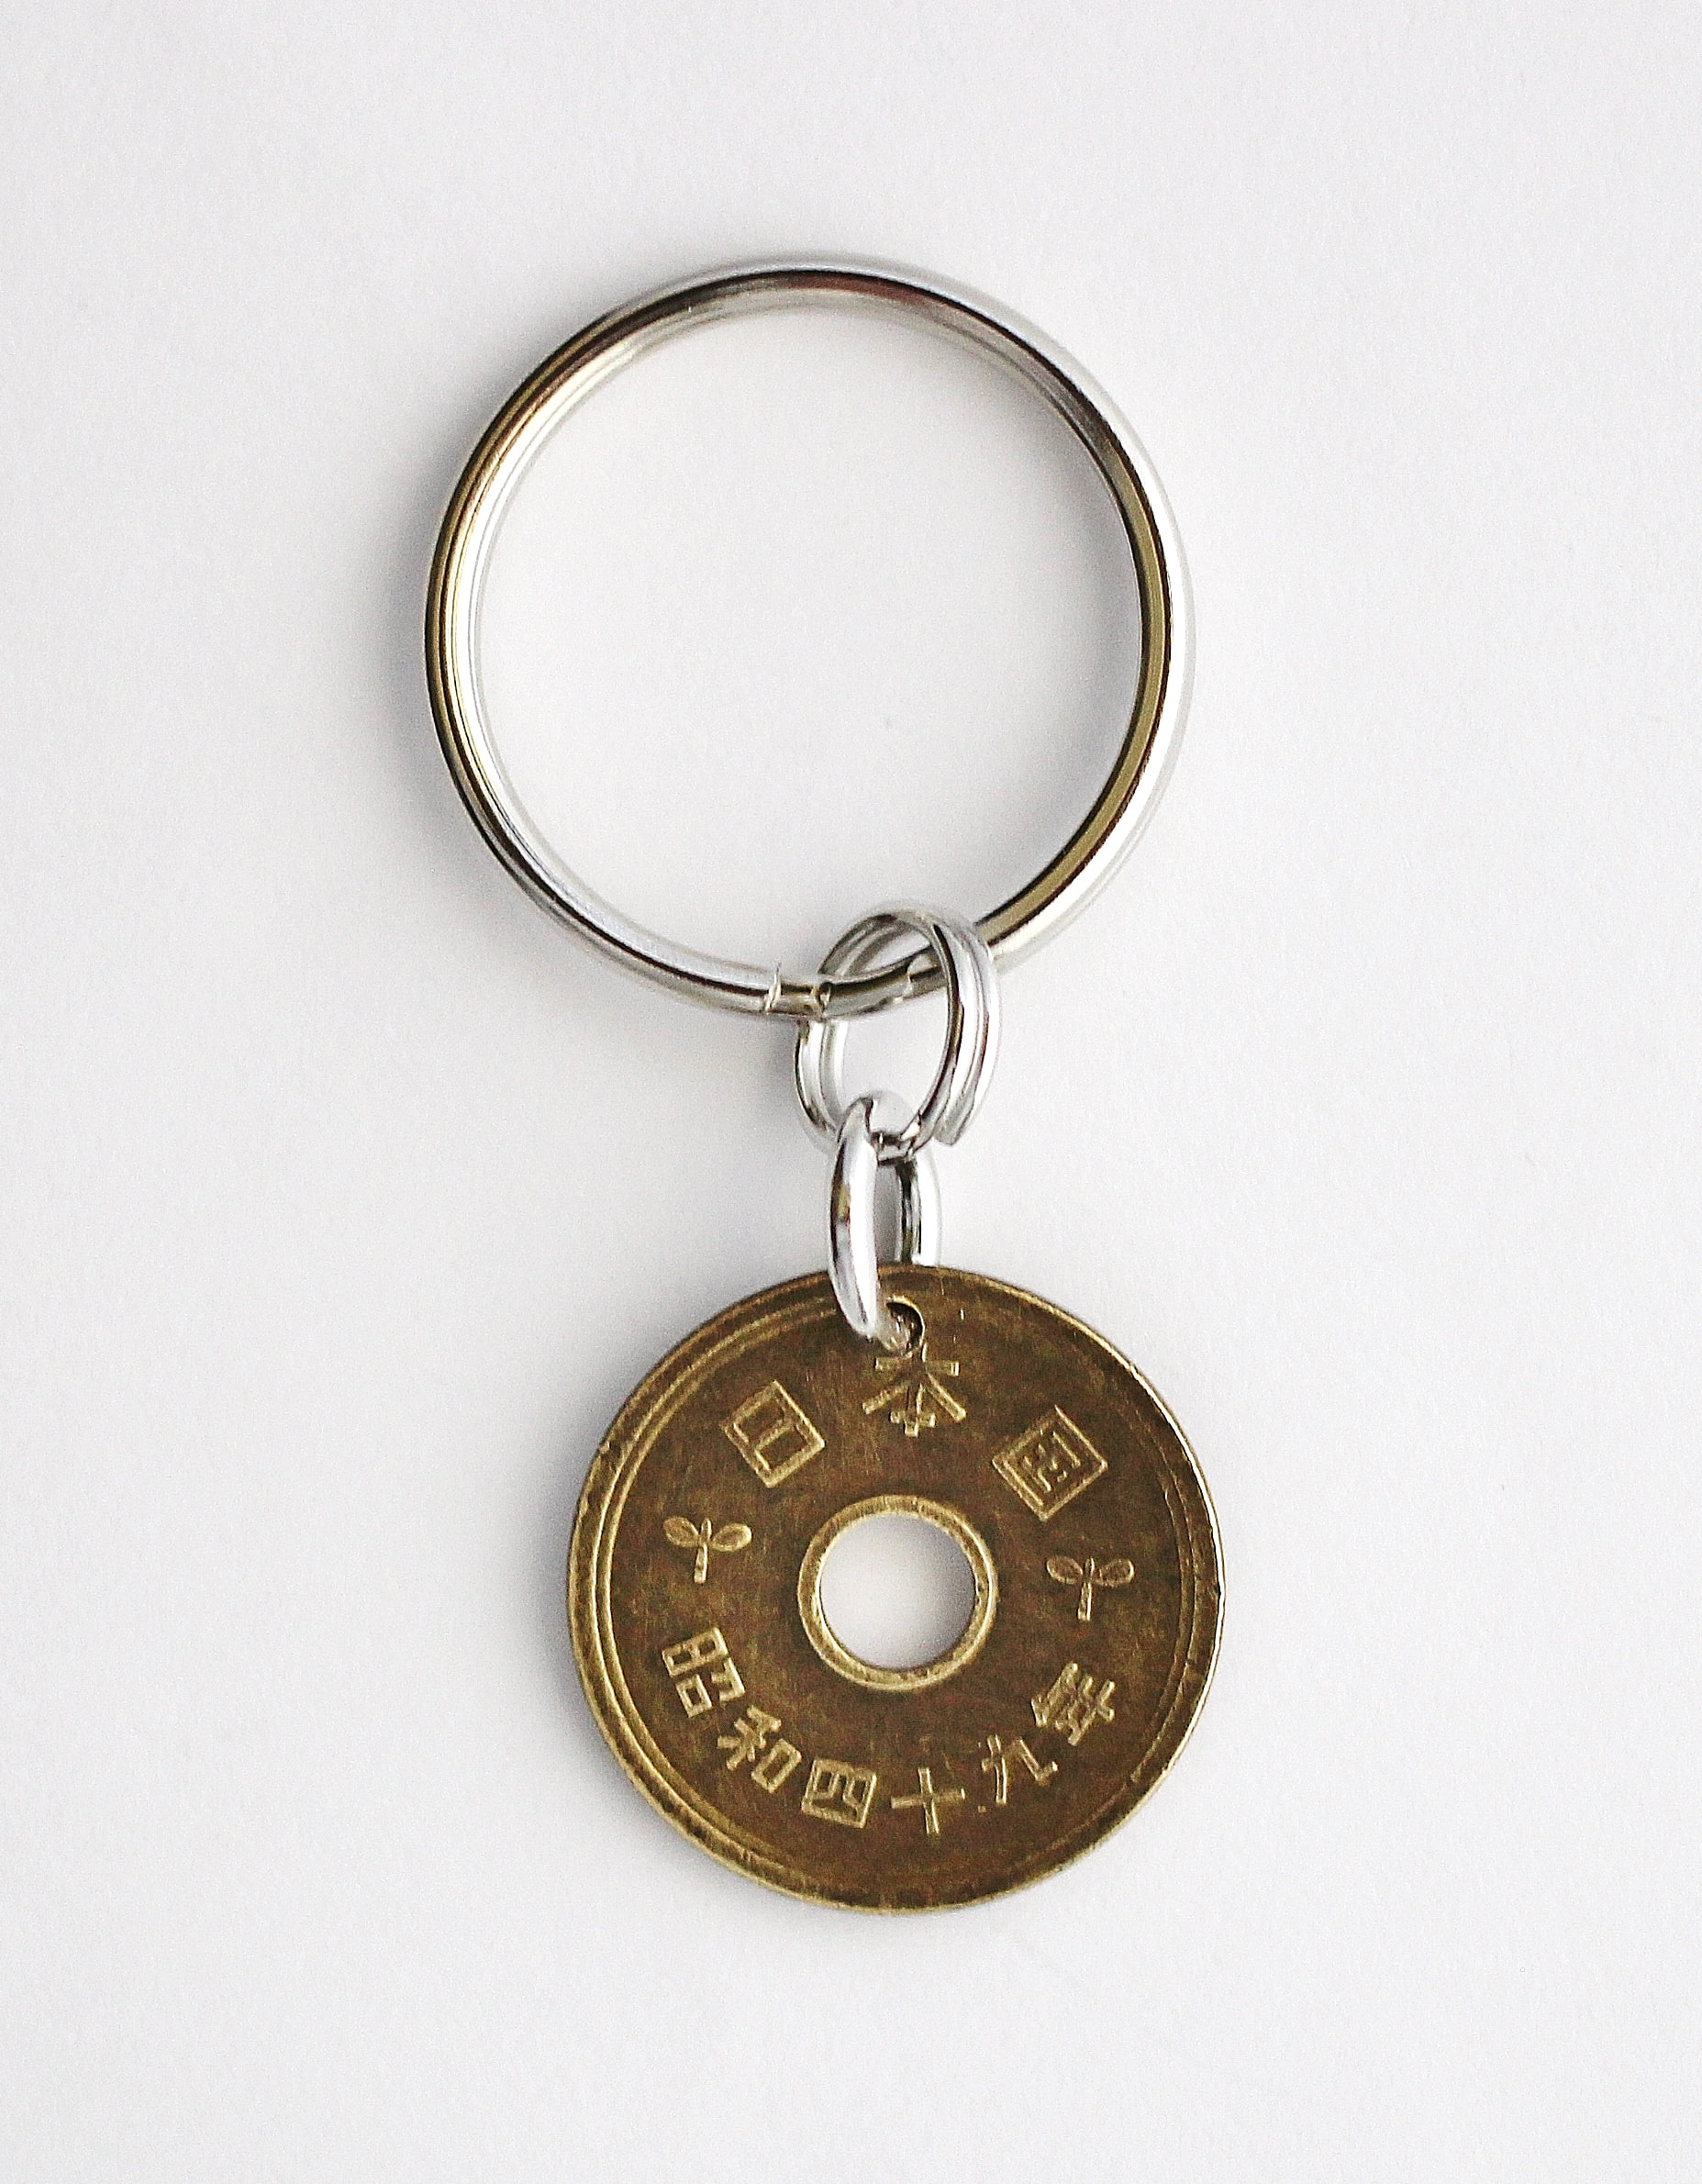 authentic Japanese 5 yen lucky coin key ring keychain handmade